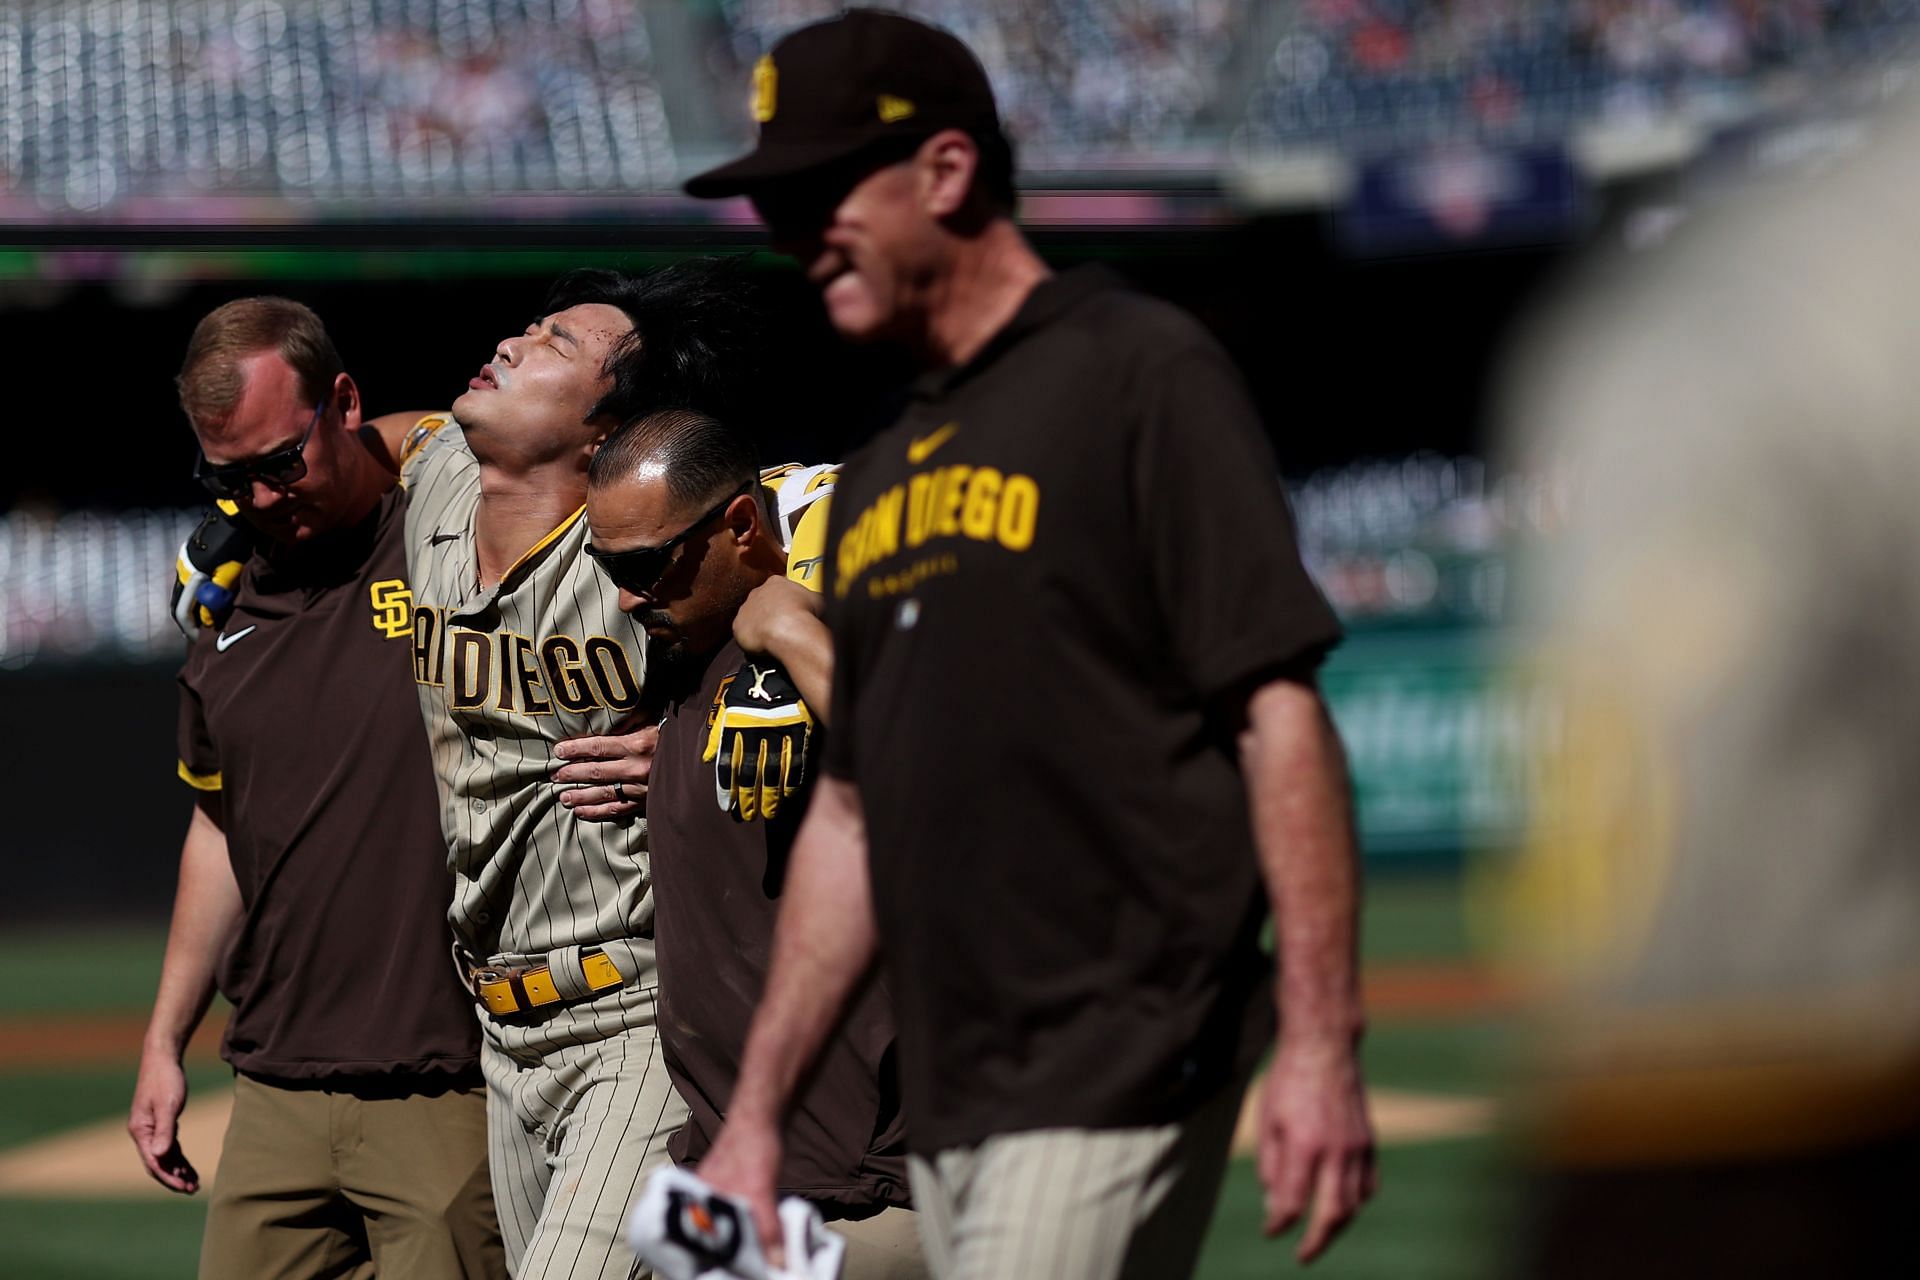 5 weird baseball injuries after Padres' Kim hurt kicking water